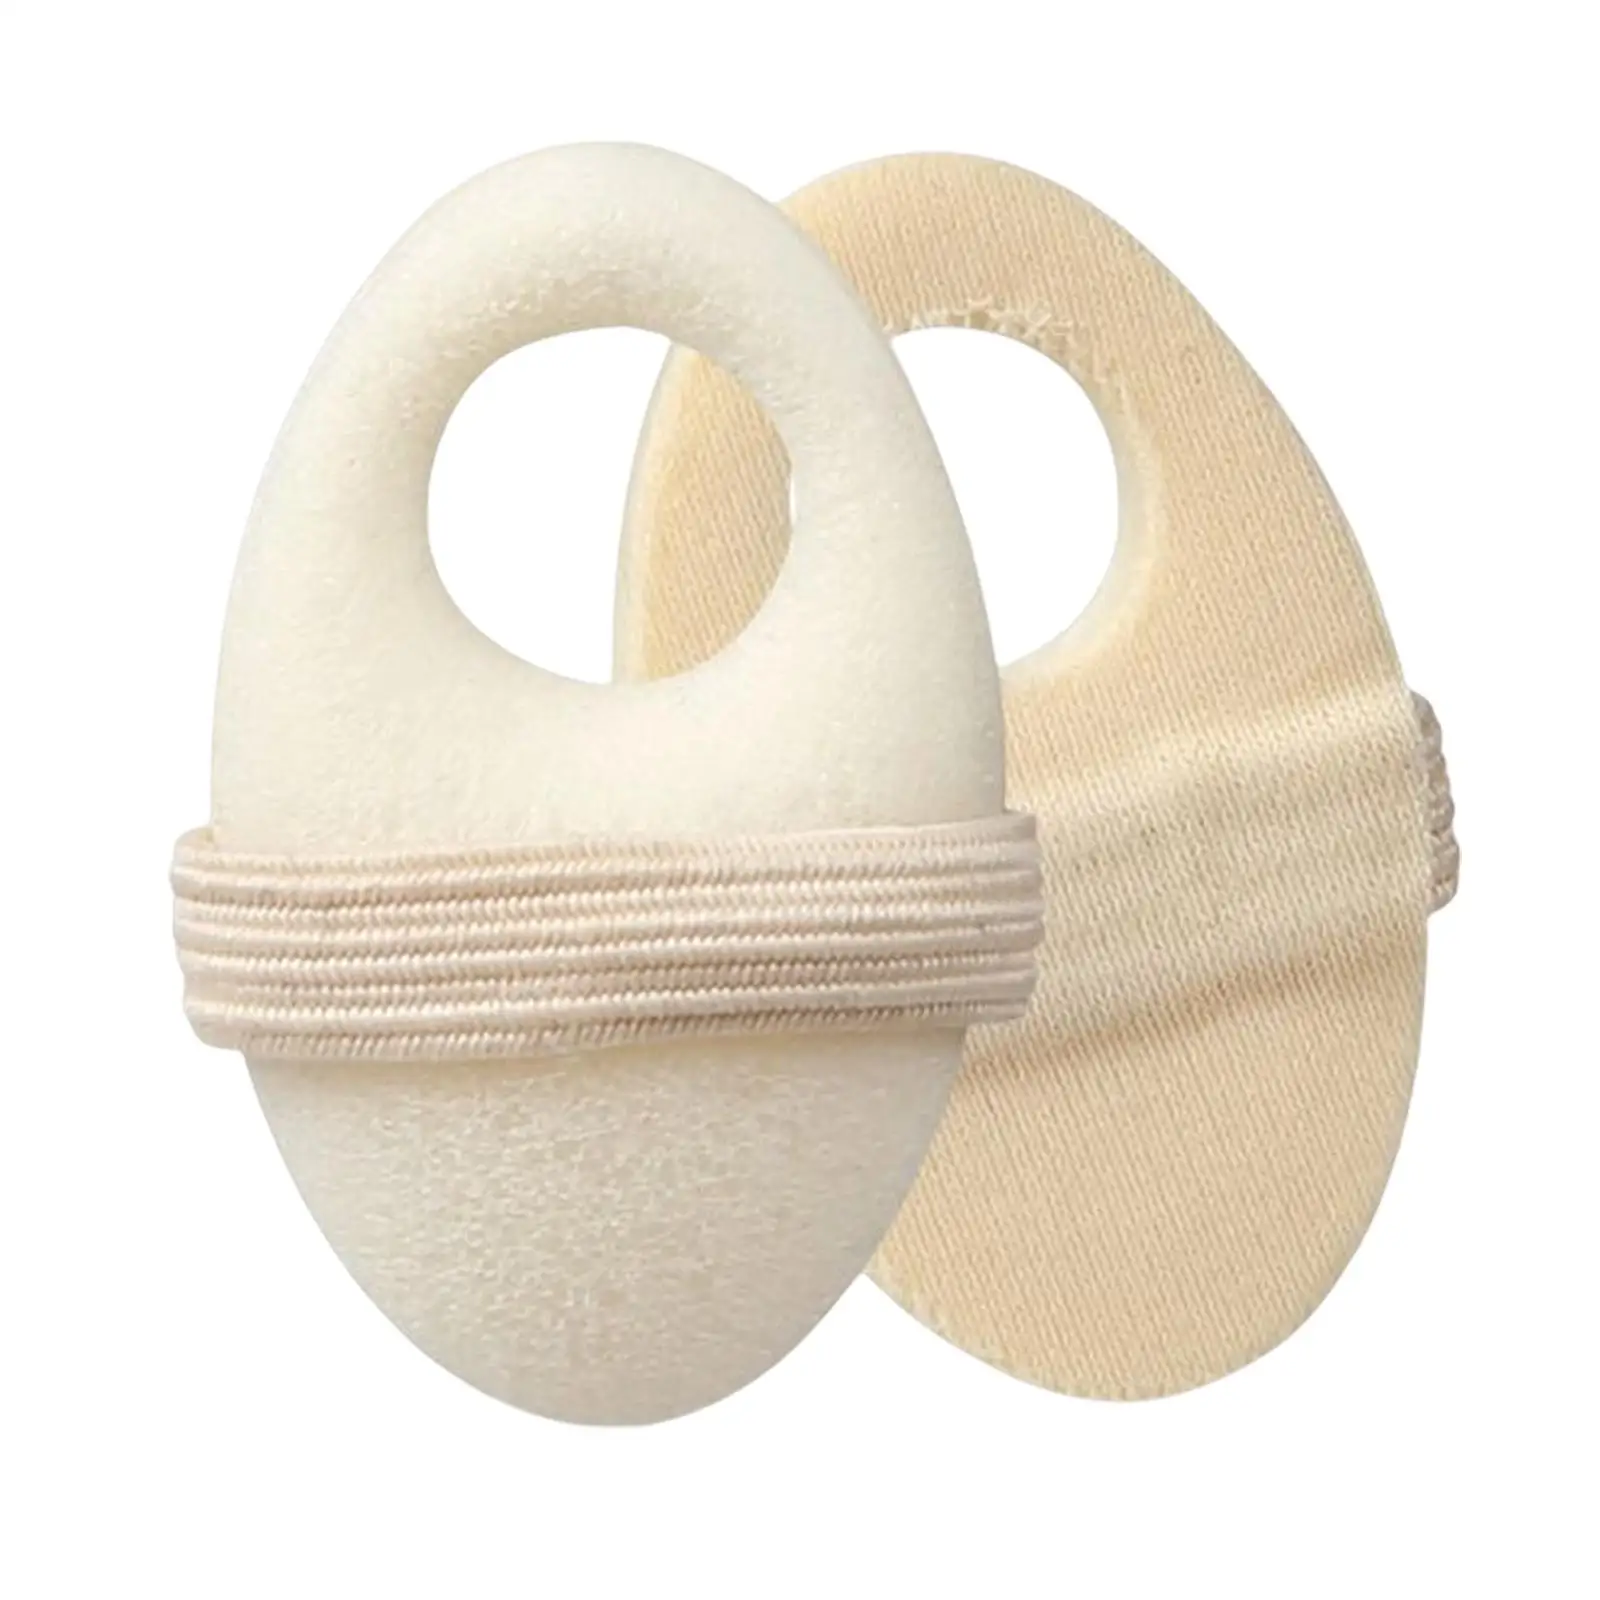 2Pcs Soft Callus Cushions Reduce Frictions Care Tool Nonslip Calluses Pads